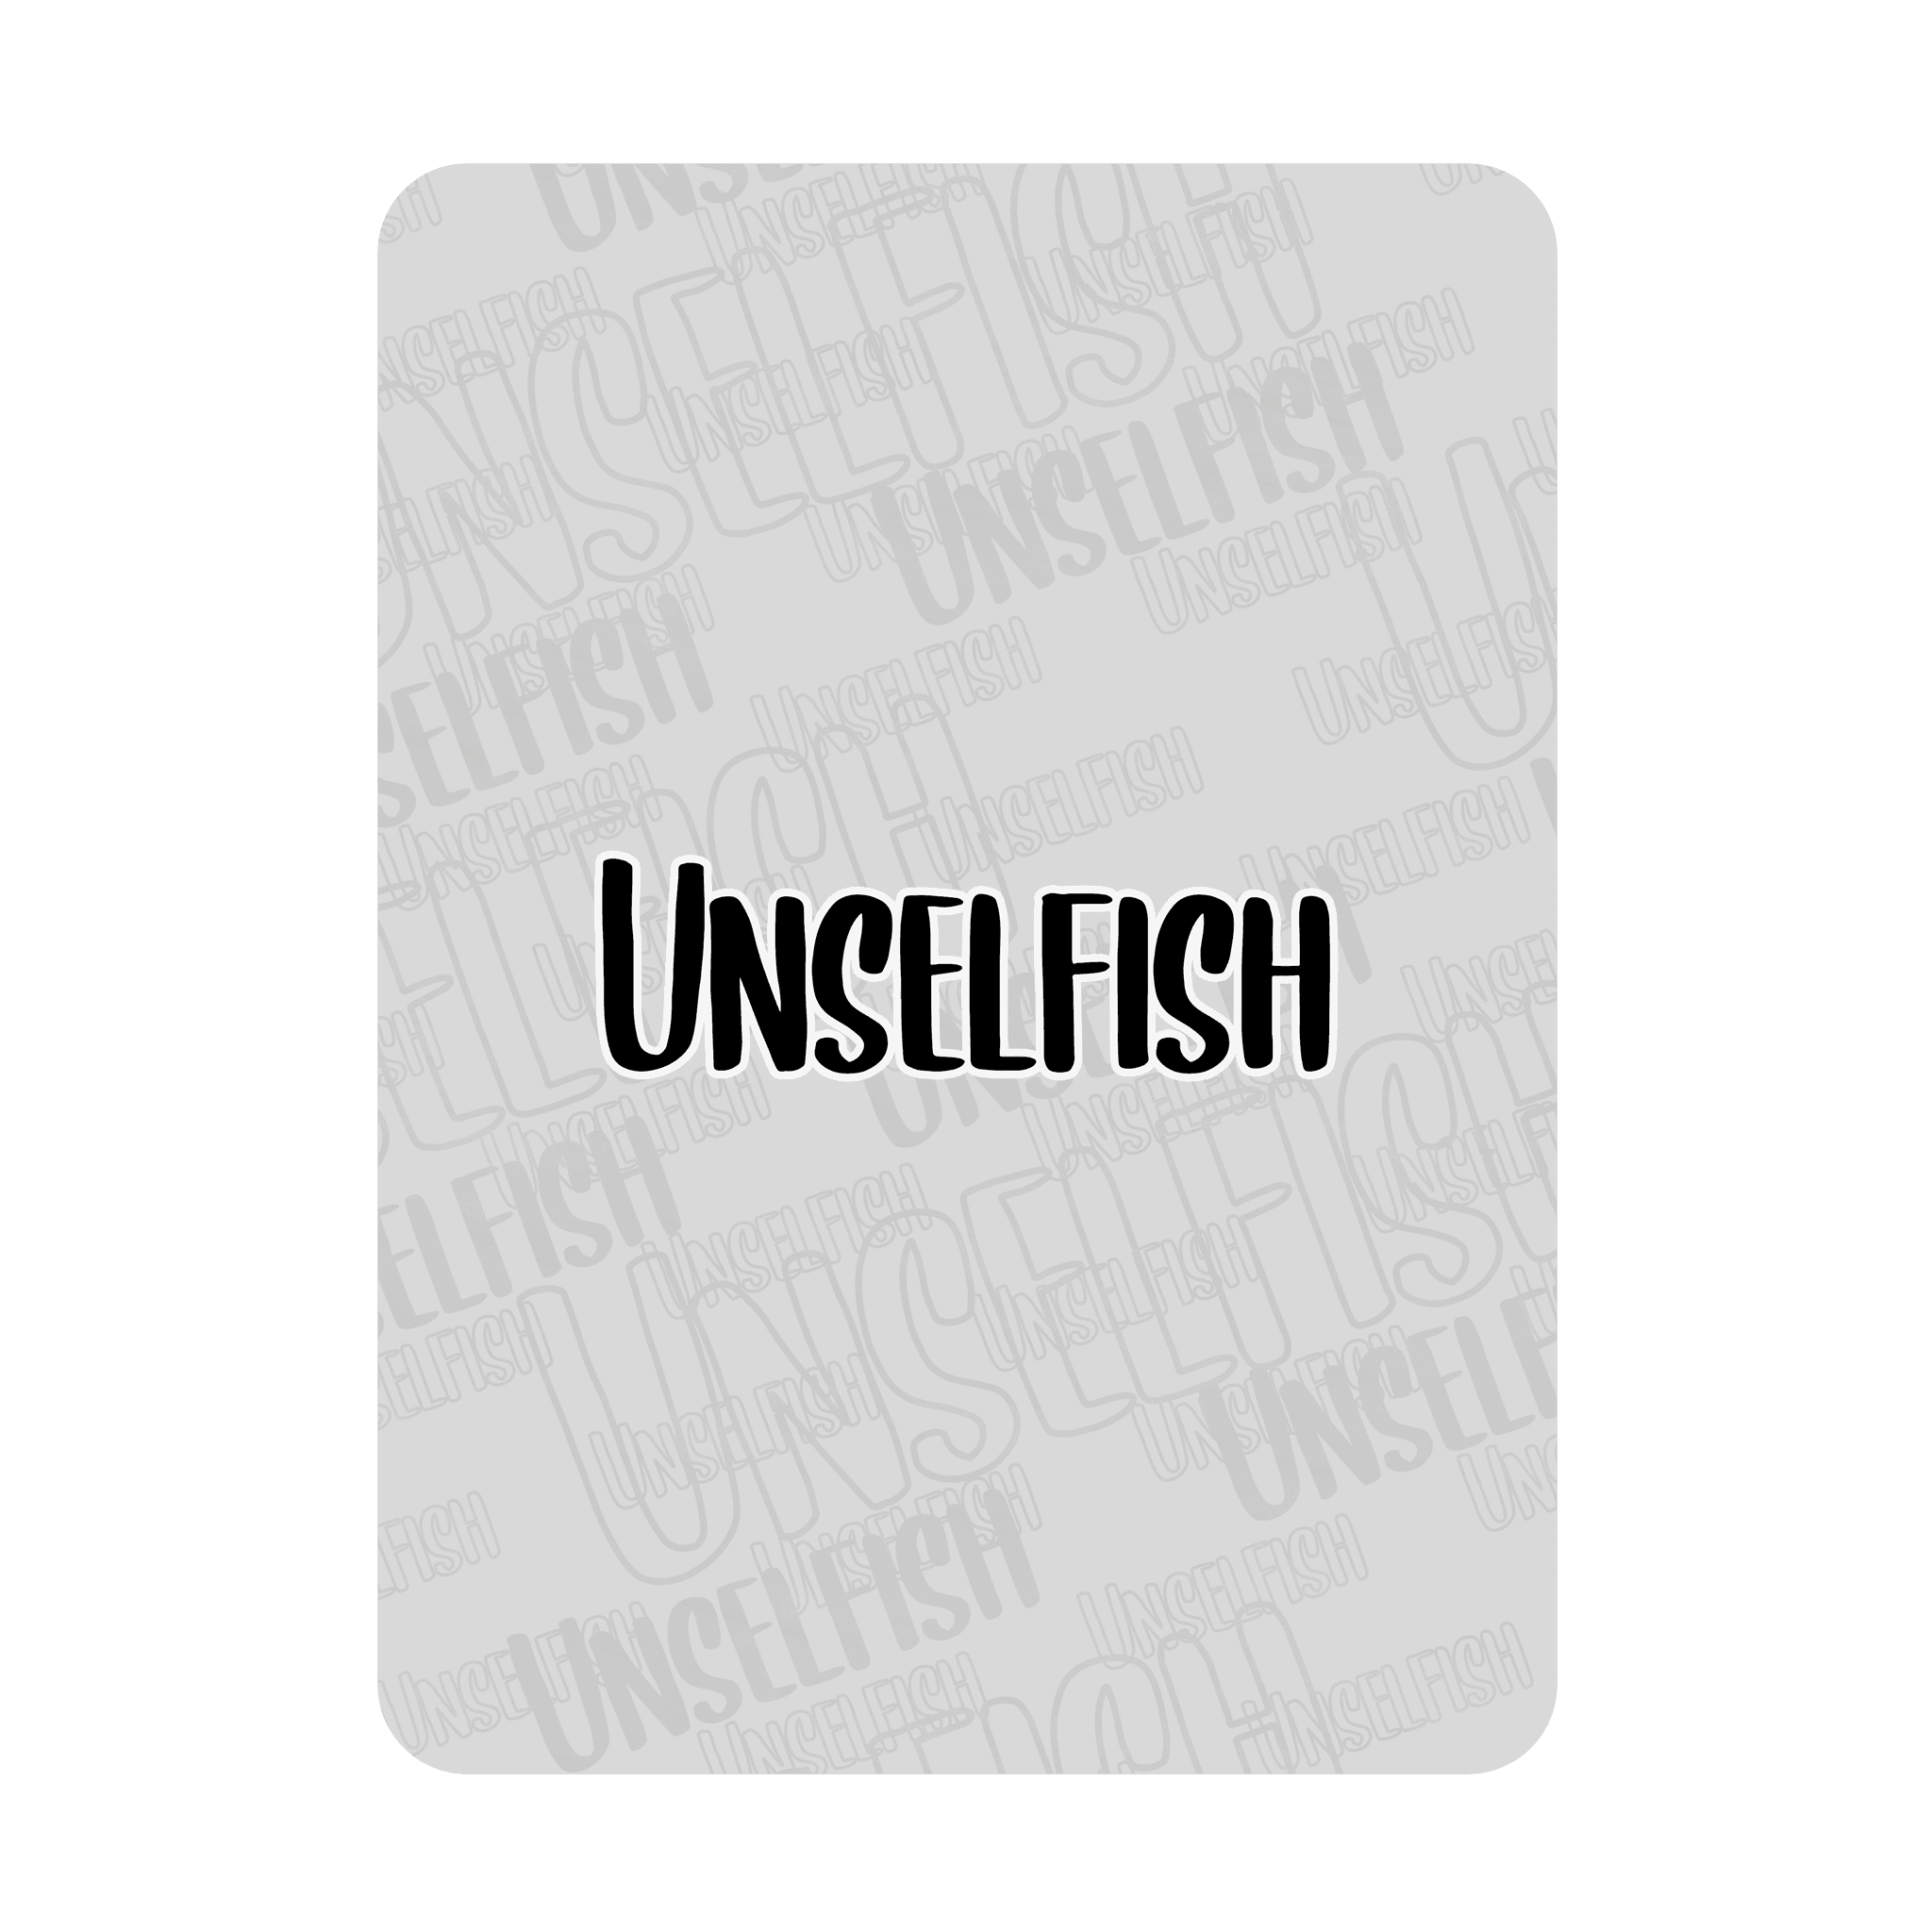 Unselfish